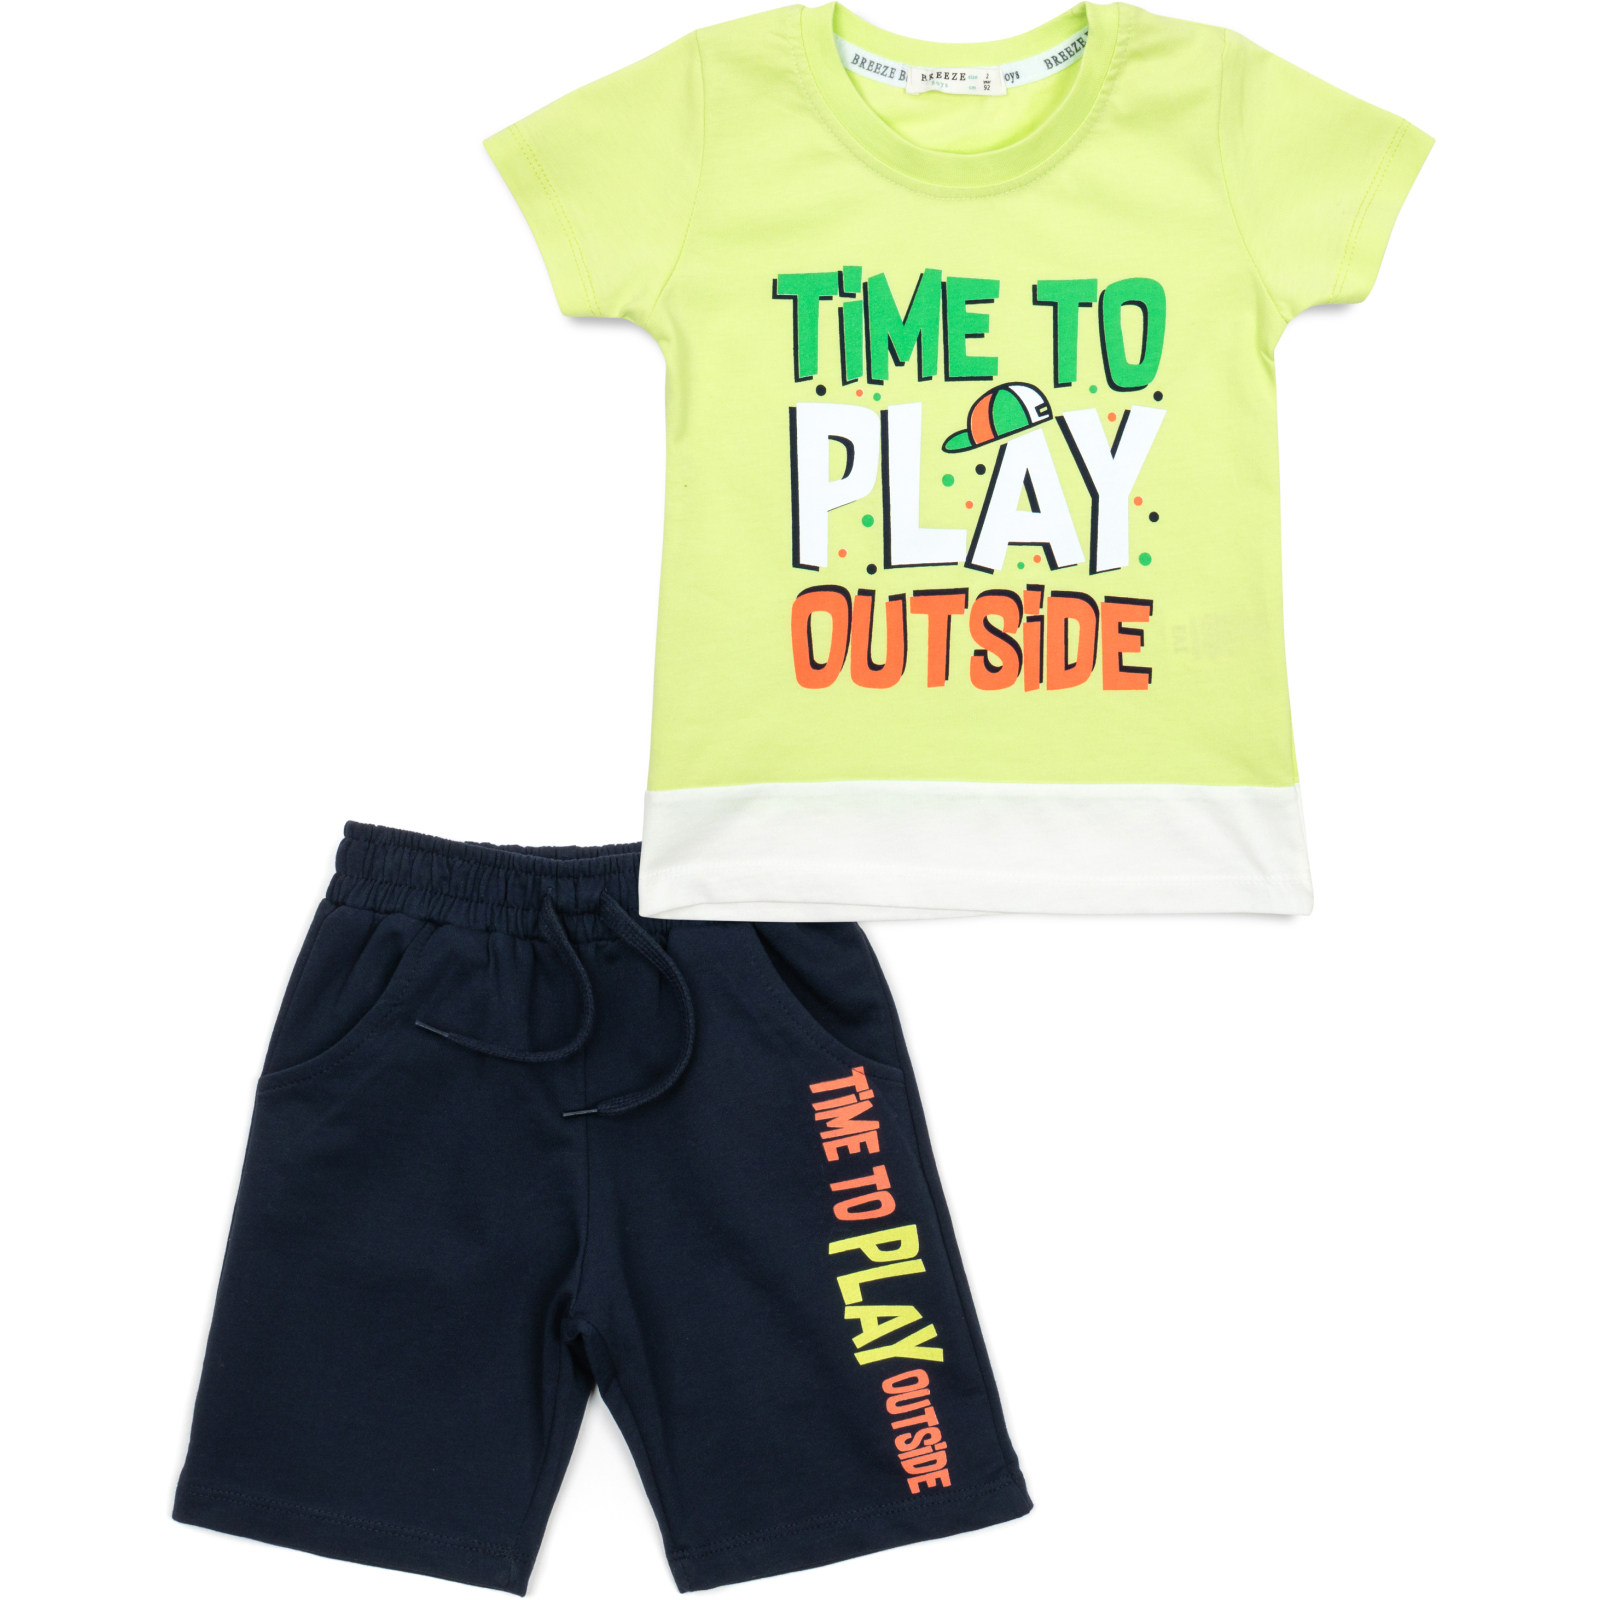 Набор детской одежды Breeze TIME TO PLAY OUTSIDE (14591-116B-green)